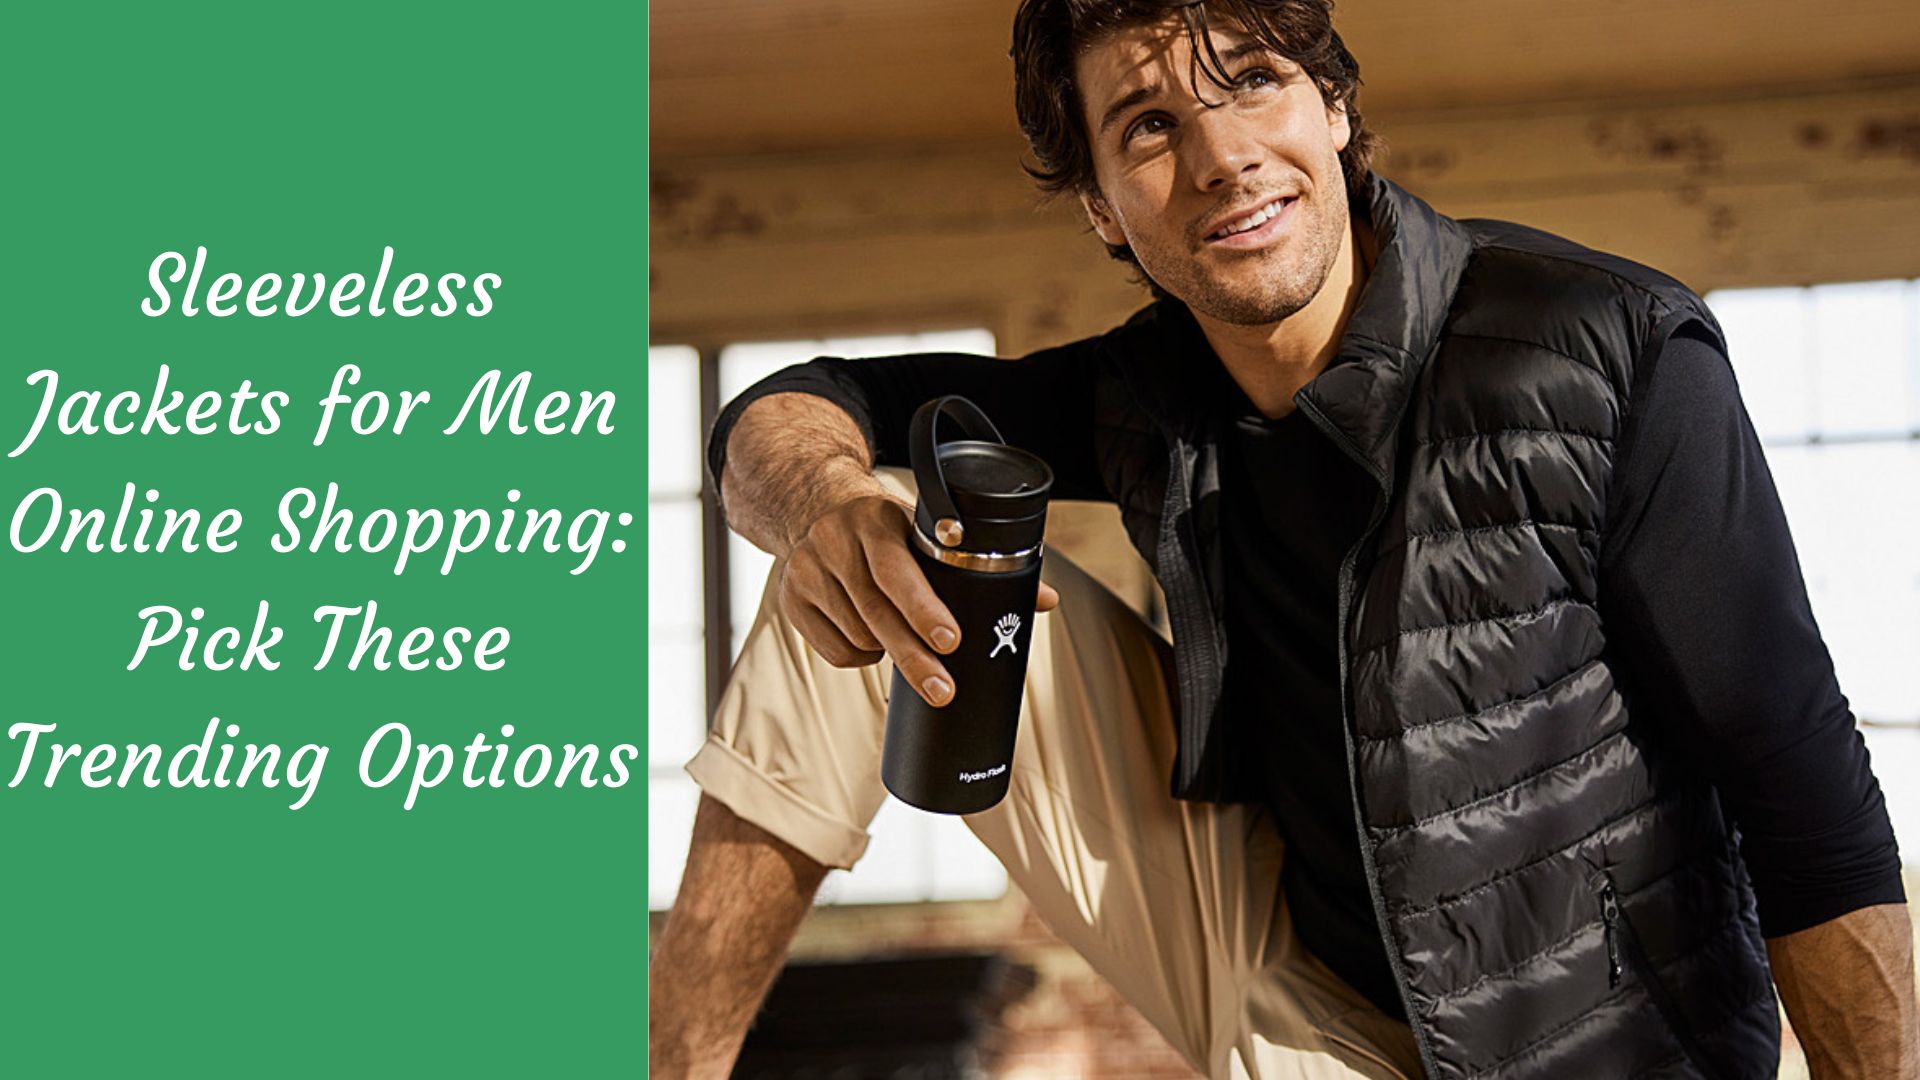 Sleeveless Jackets for Men Online Shopping: Pick These Trending Options